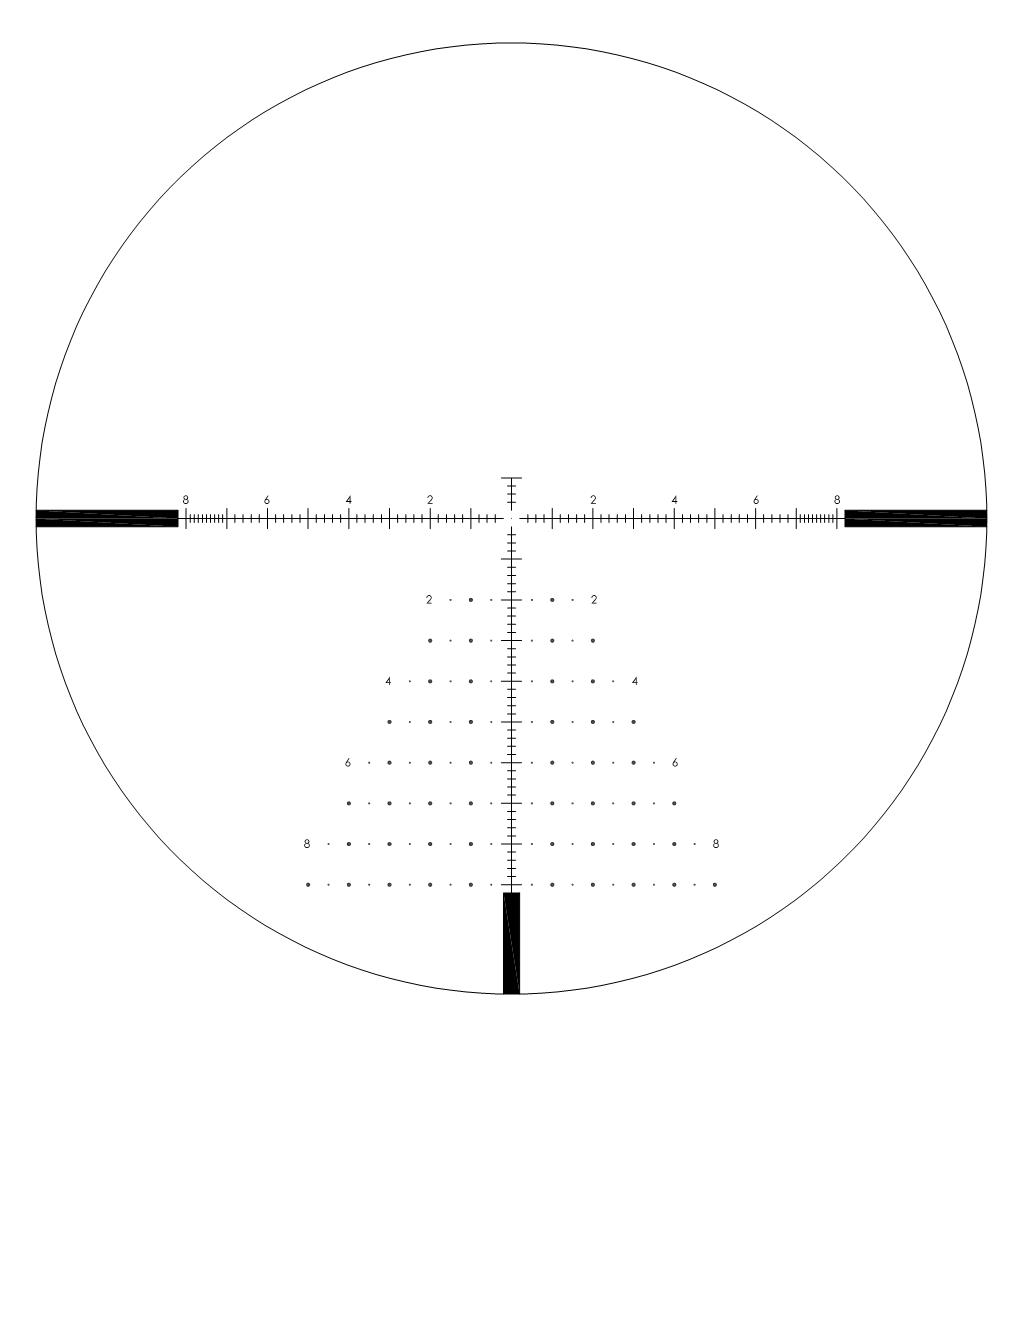 Simple reticle 1 - no circle.jpg